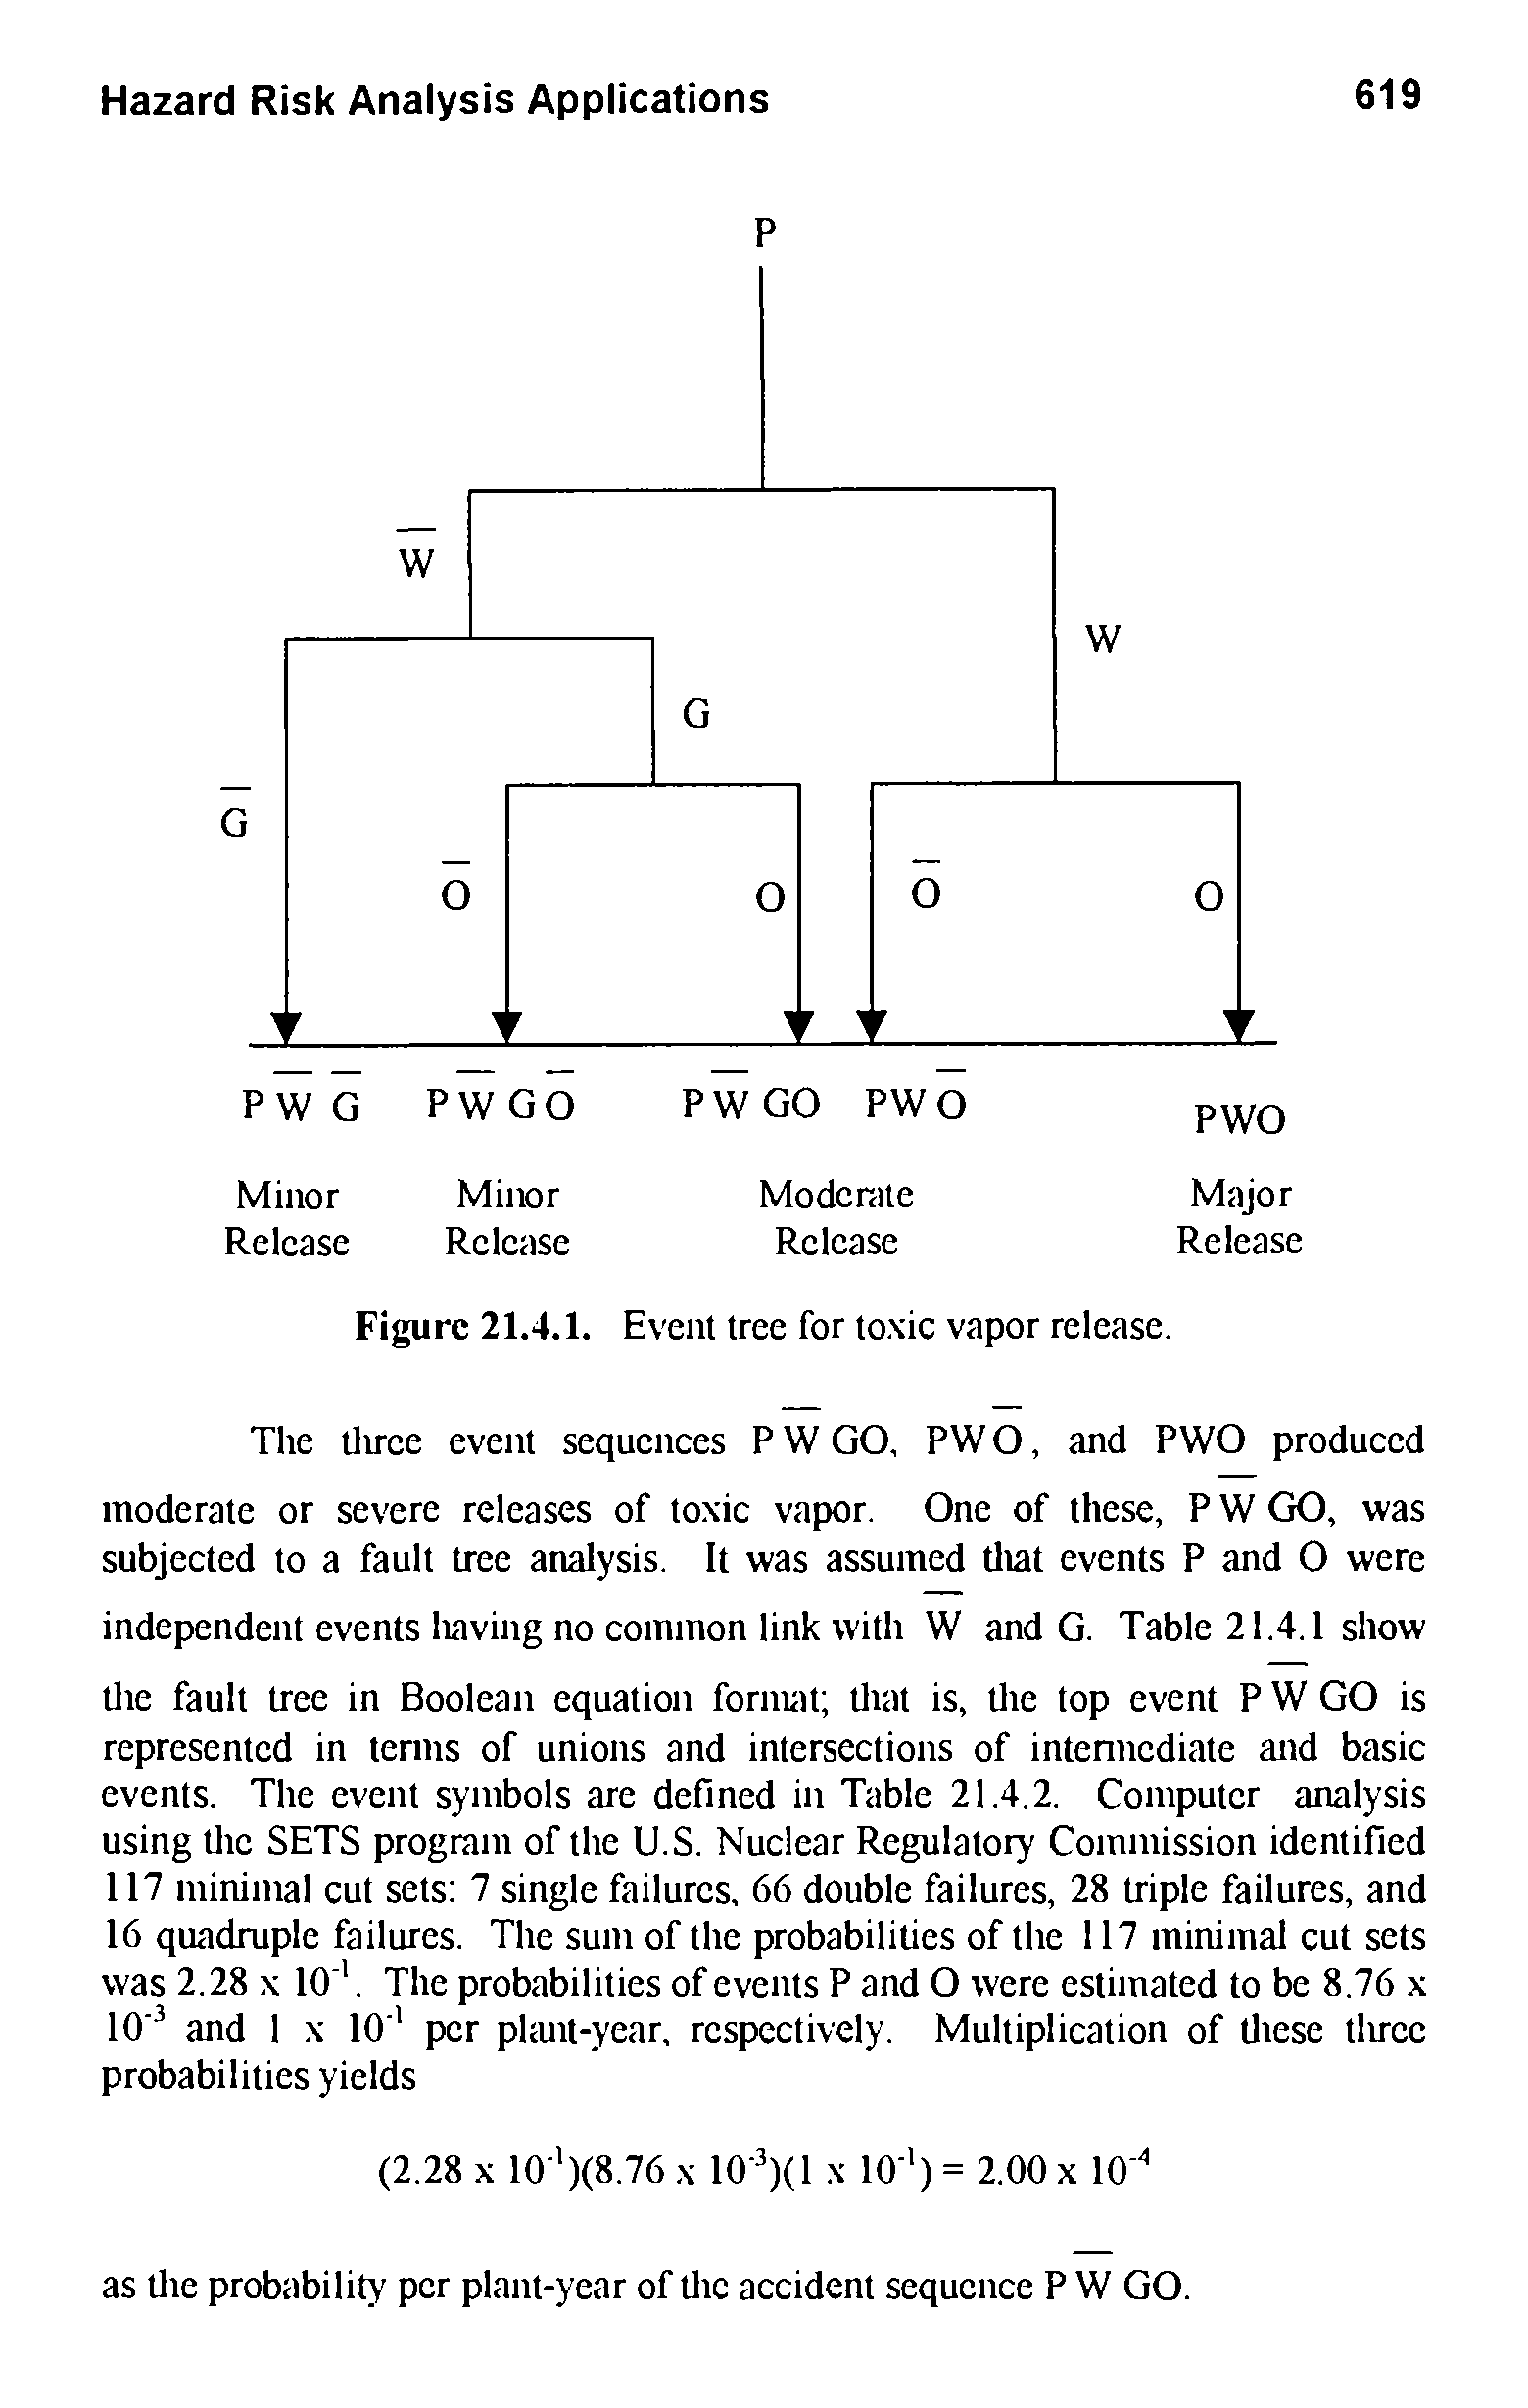 Figure 21.4.1. Event tree for toxic vapor release.